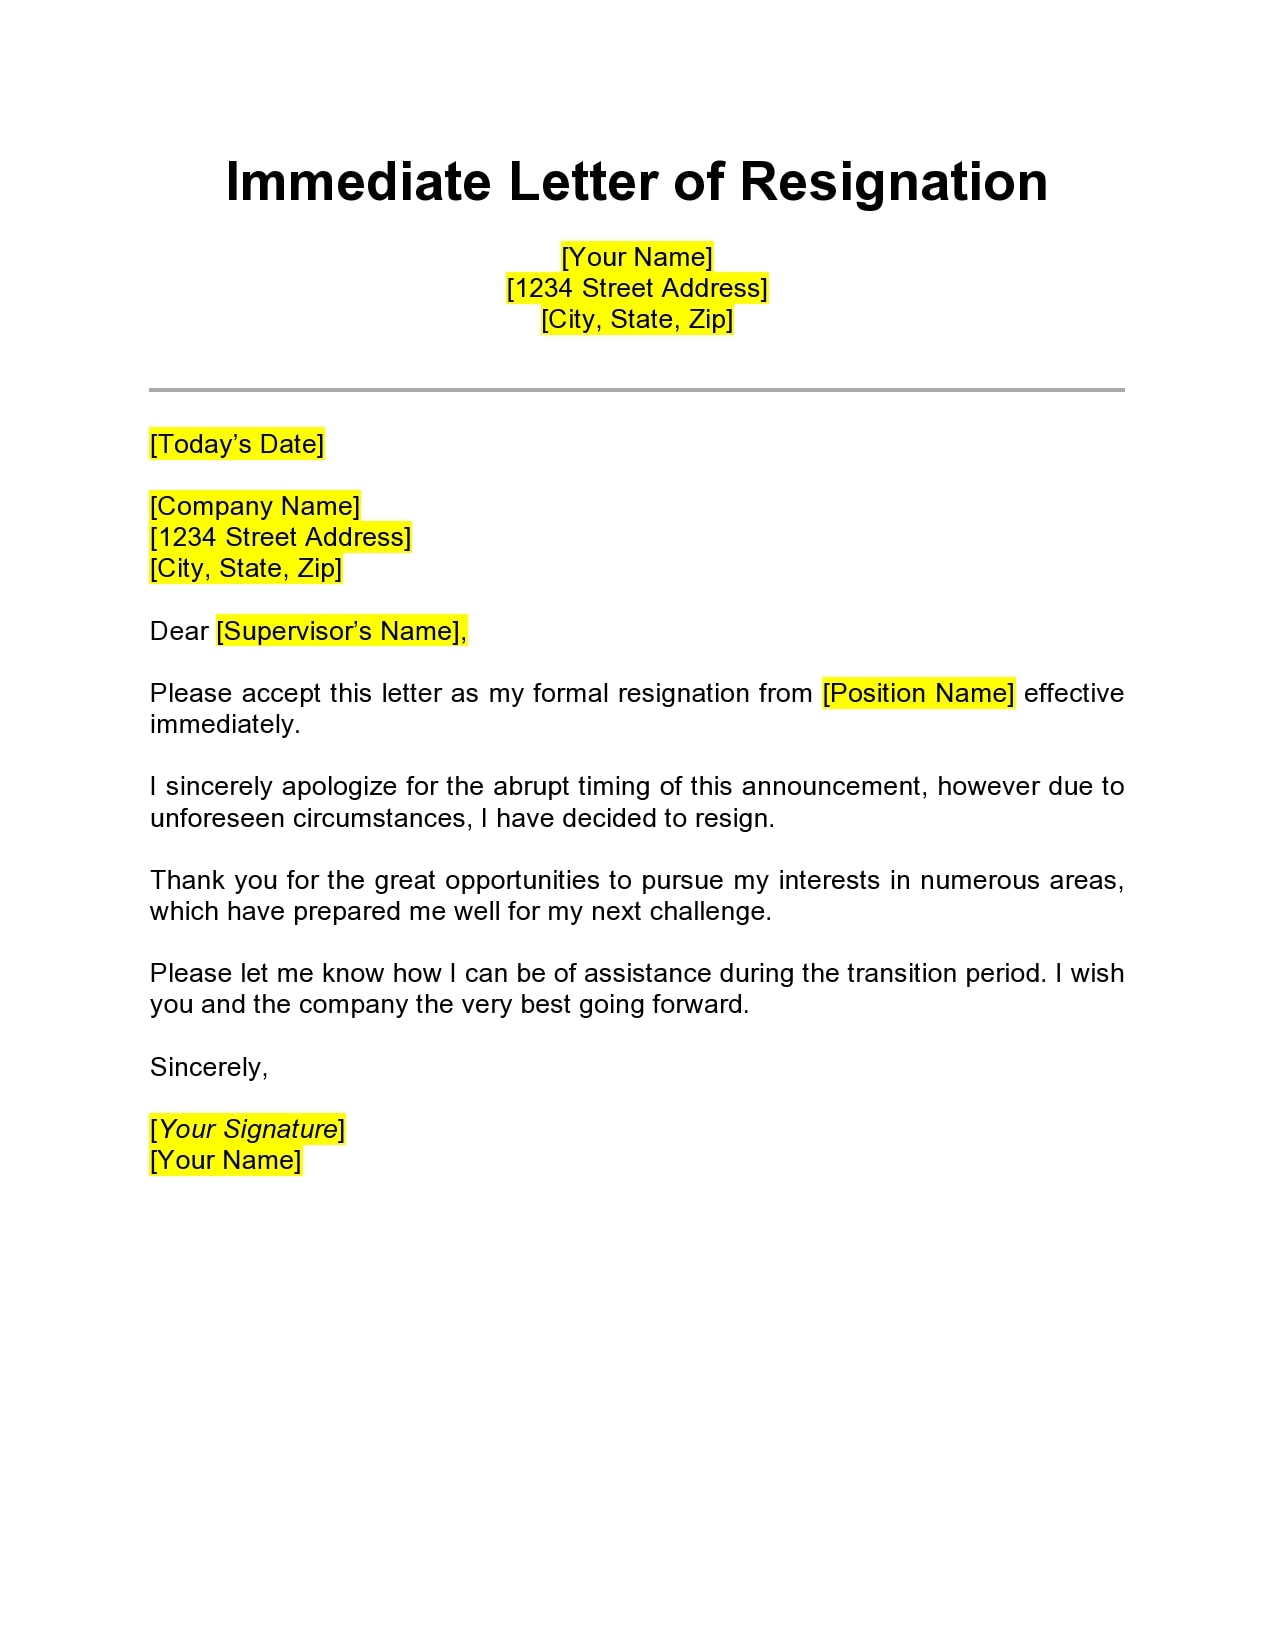 immediate-resignation-letter-template-free